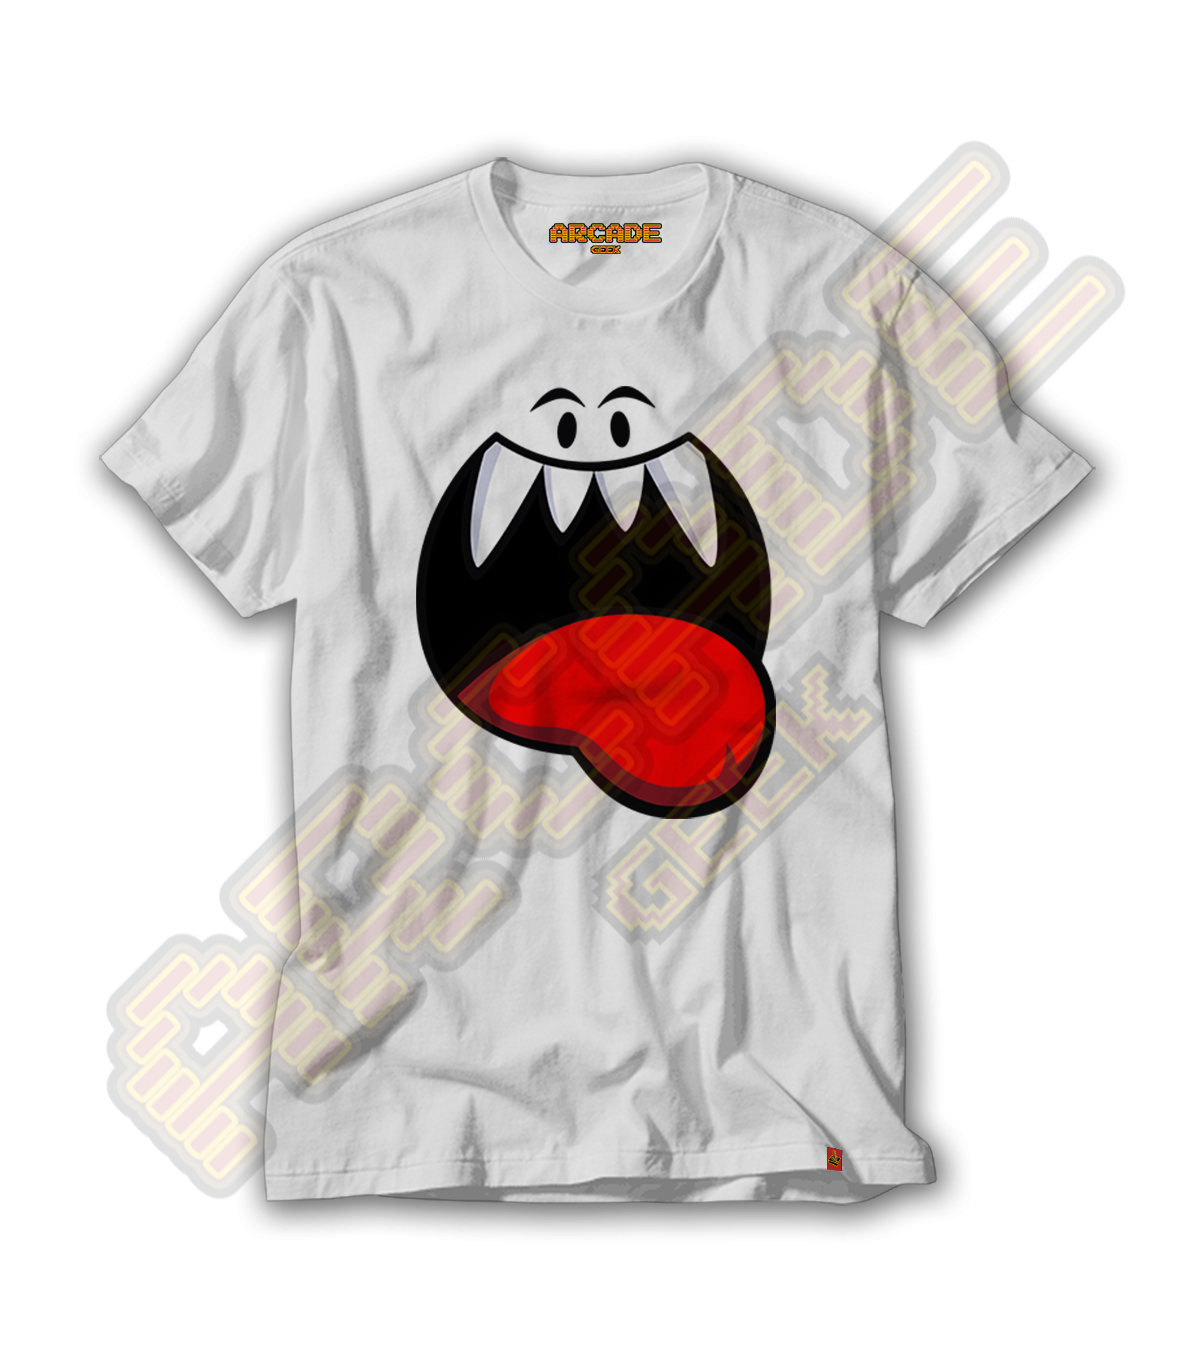 Camiseta Gamer Mario Fantasma Boo #266 - ARCADE GEEK